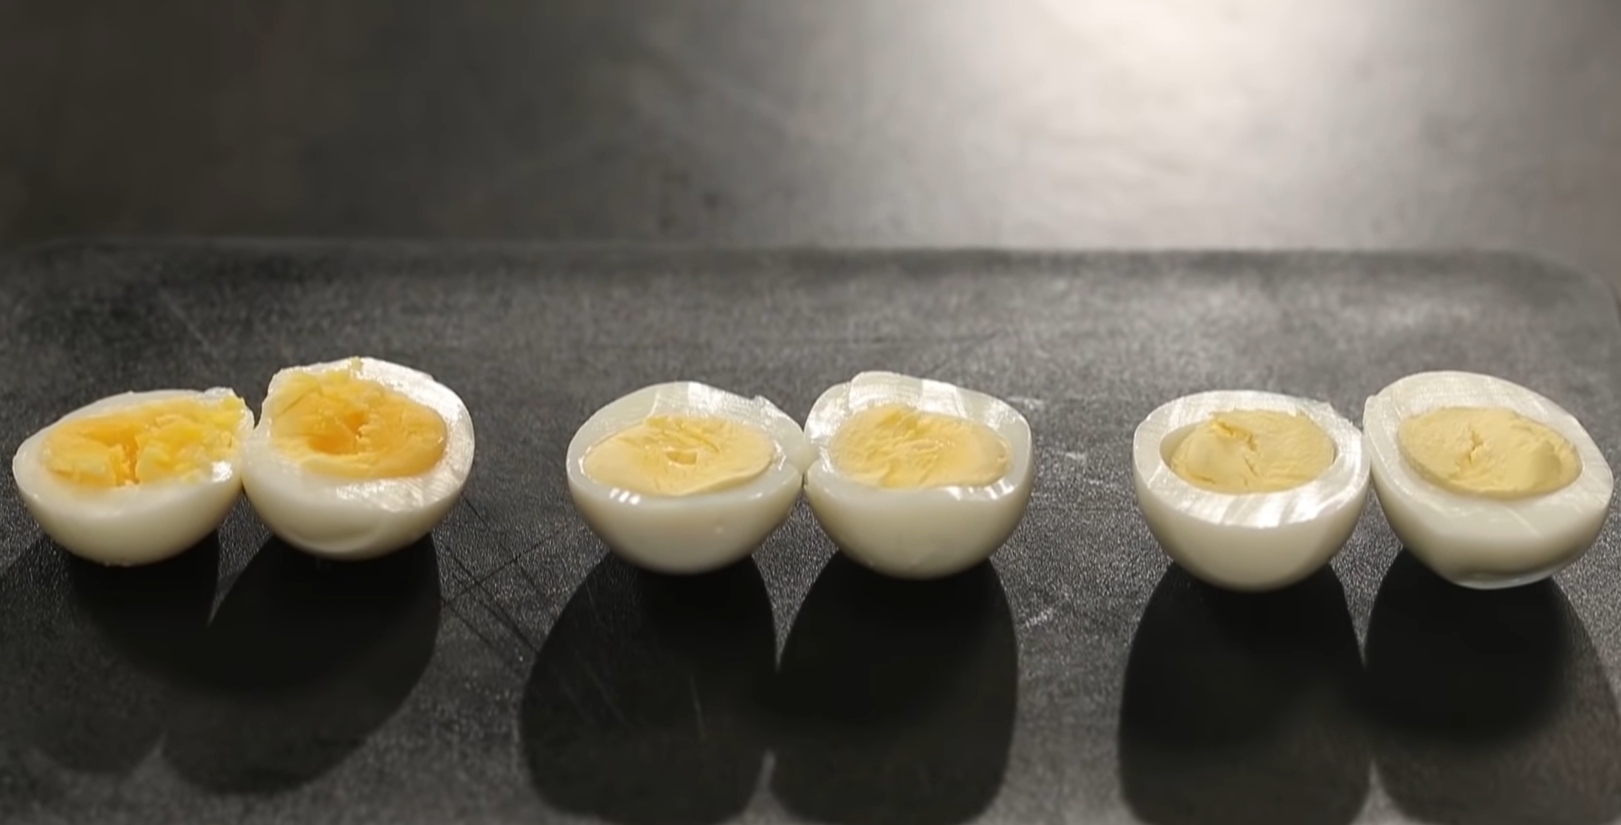 Chefkoch zeigte, wie man perfekte Eier kochen kann. Uberalles